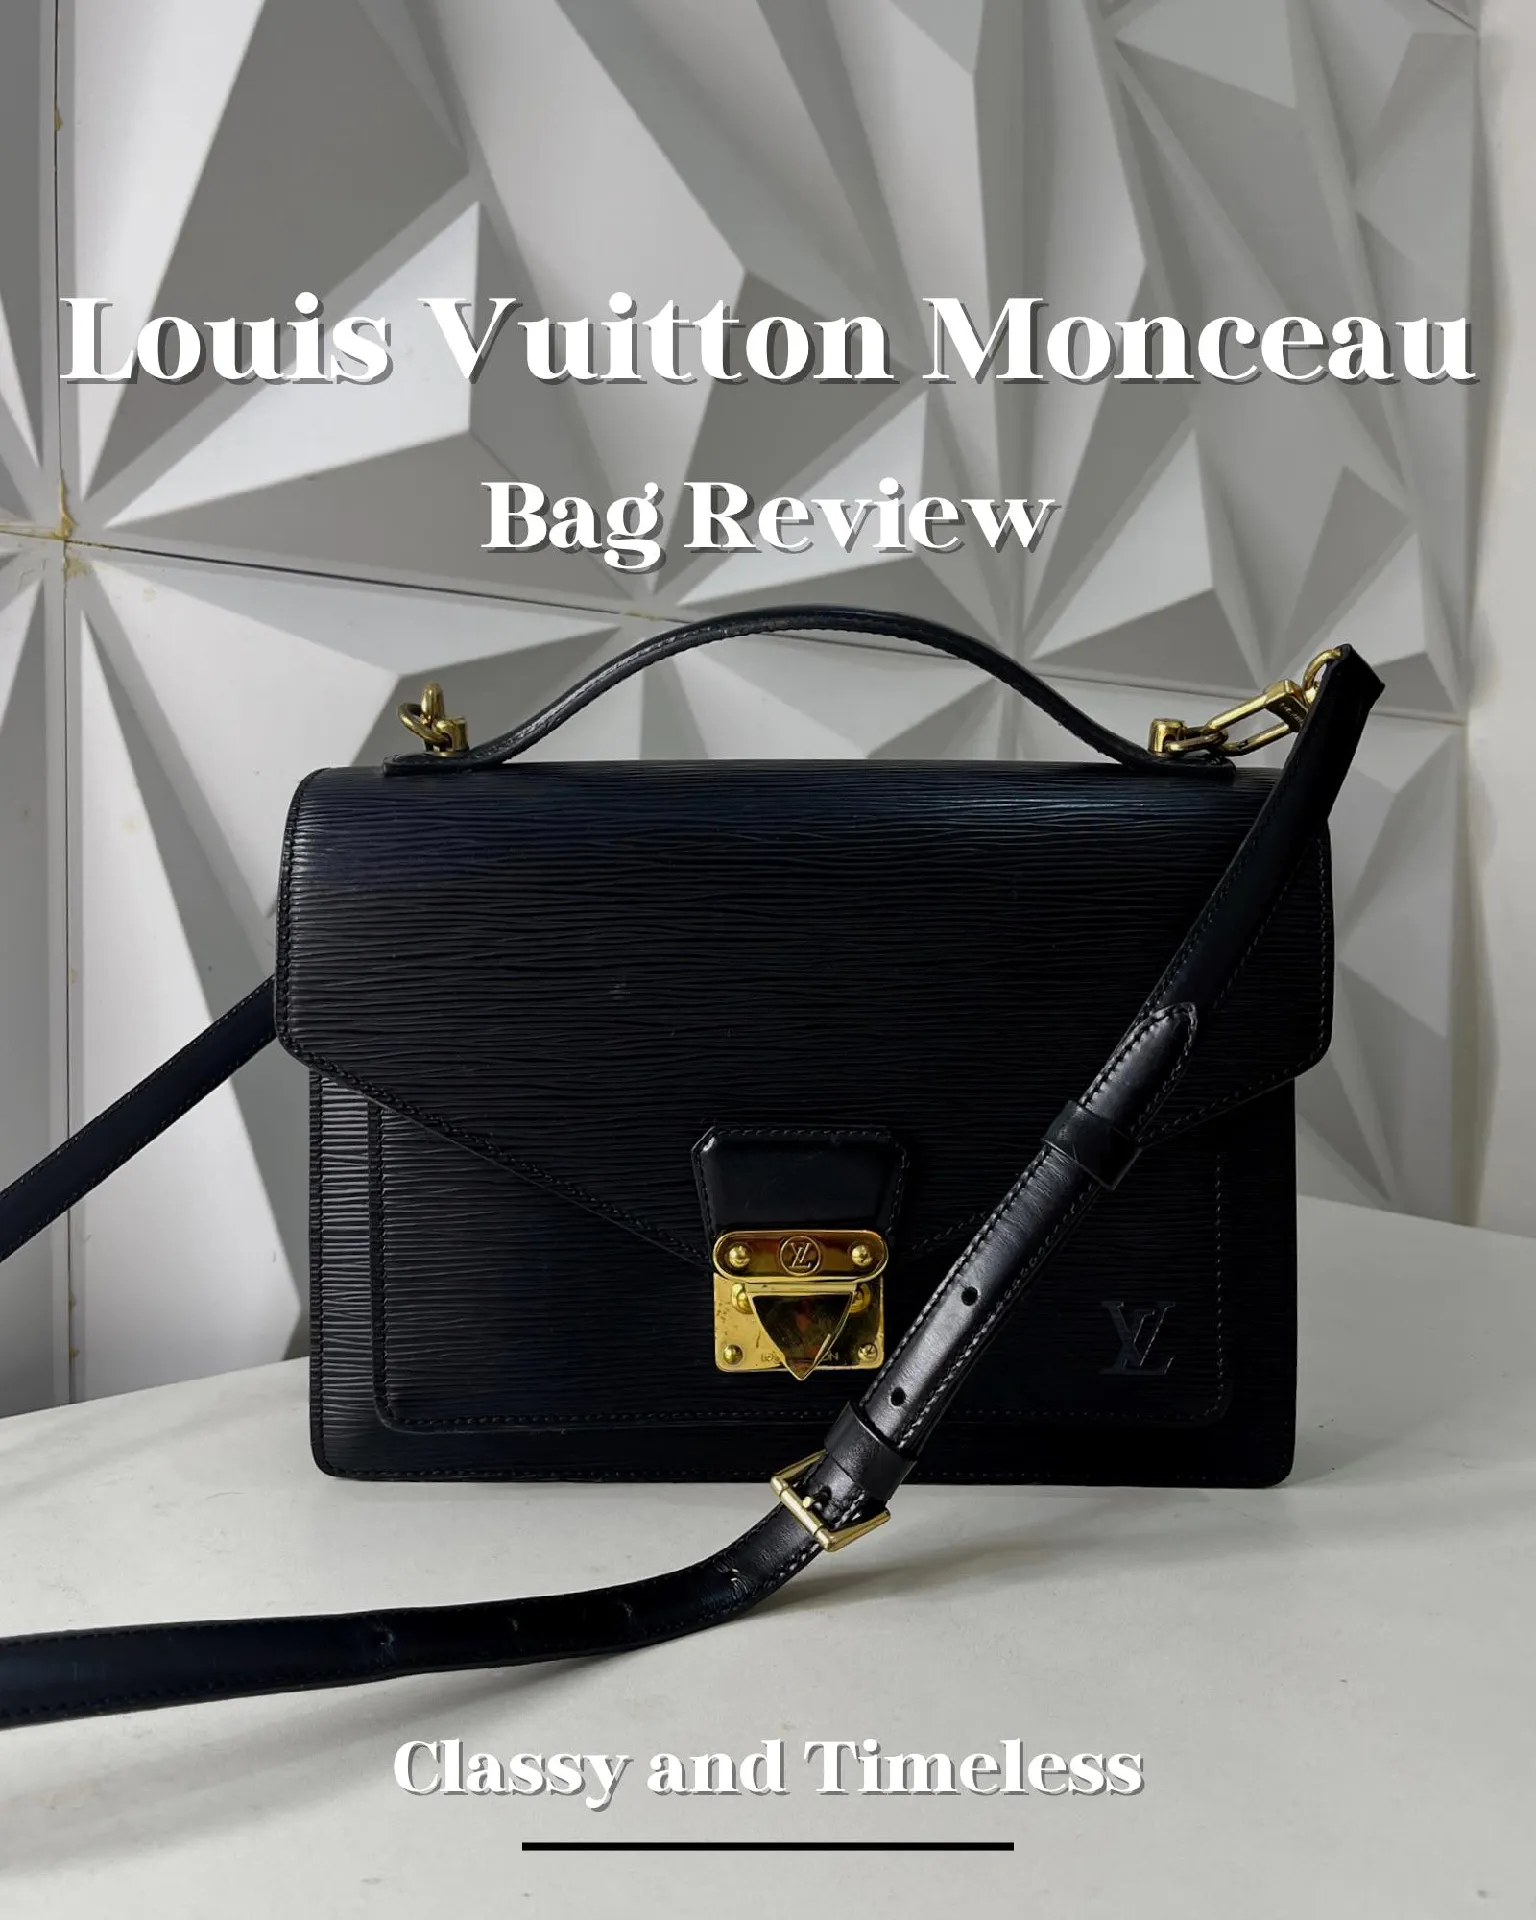 Why you should buy the Vintage Louis Vuitton Monceau